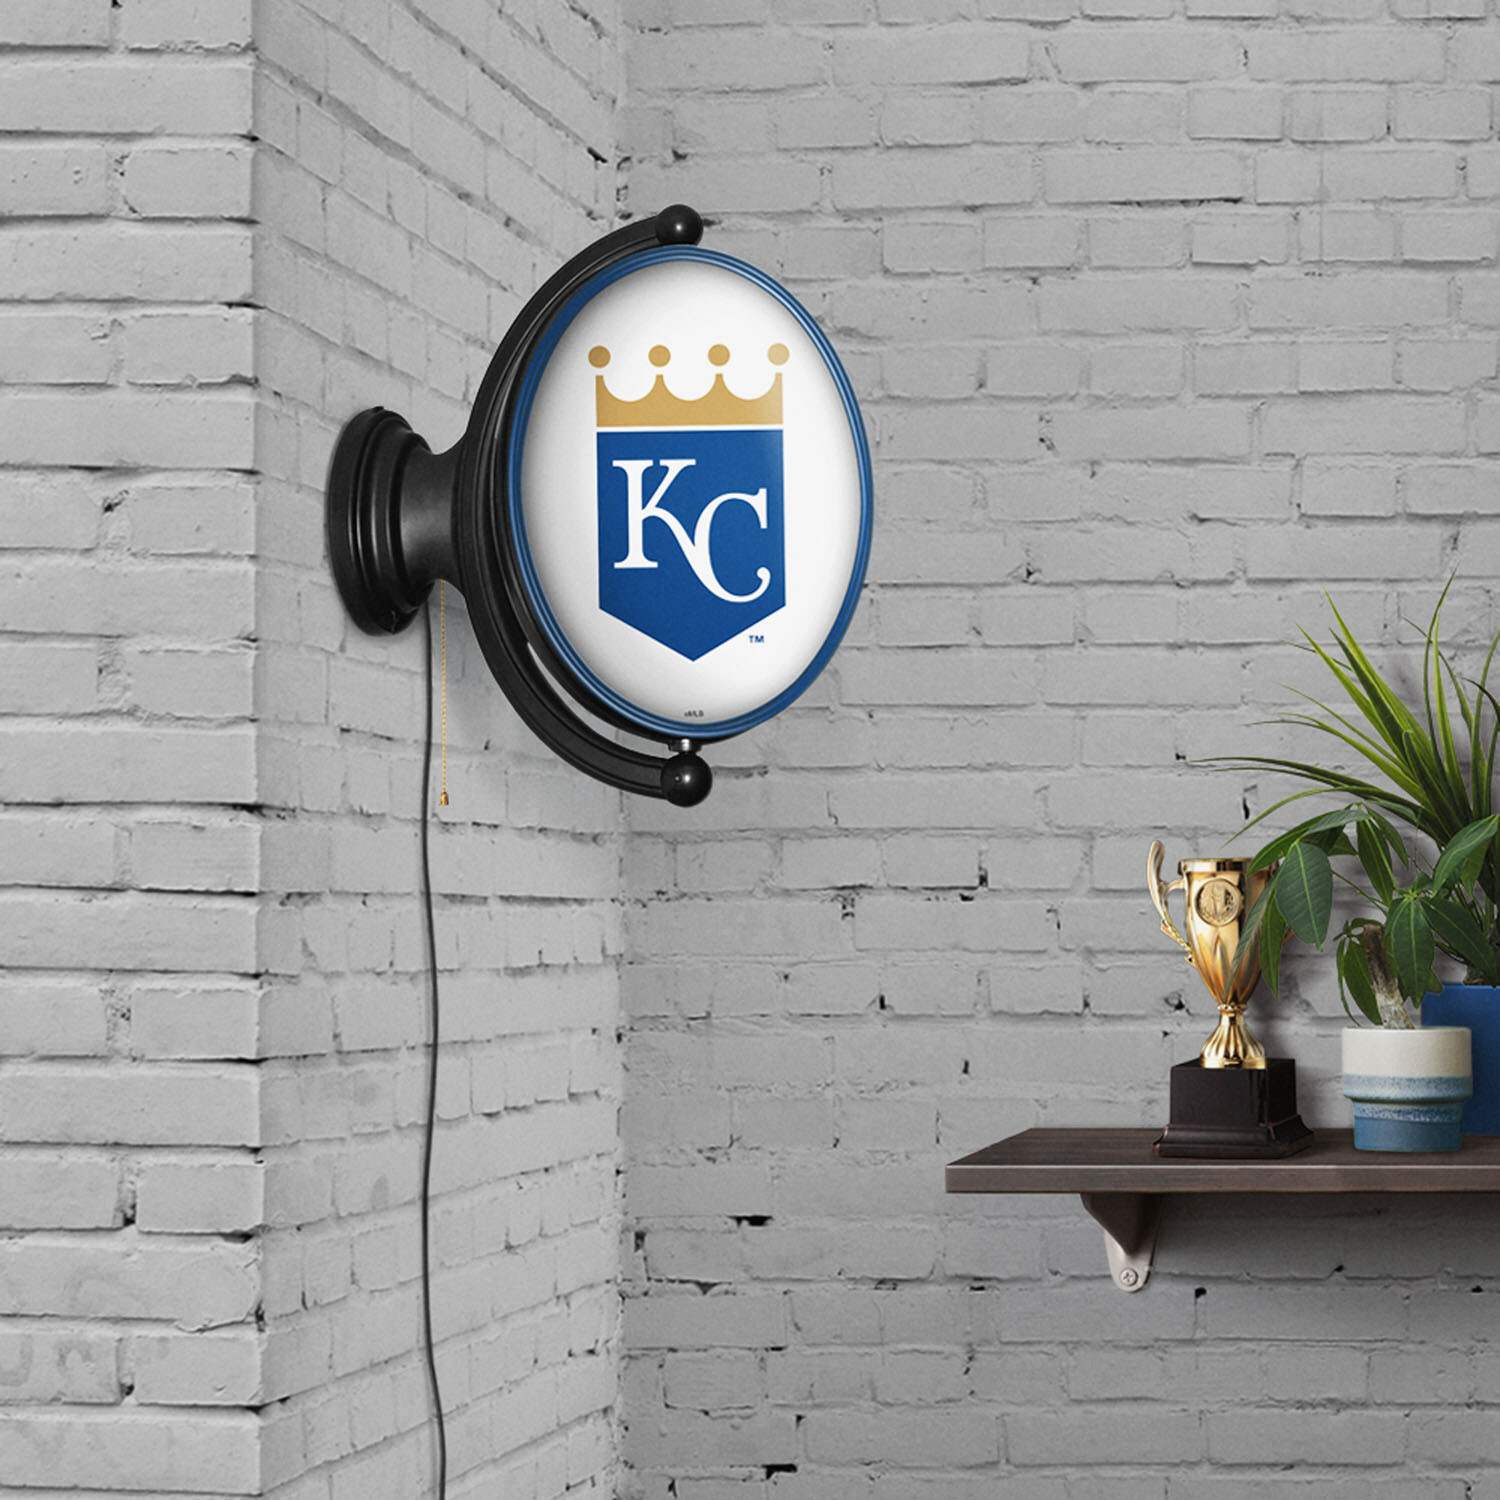 Kansas City Royals - The Fan-Brand